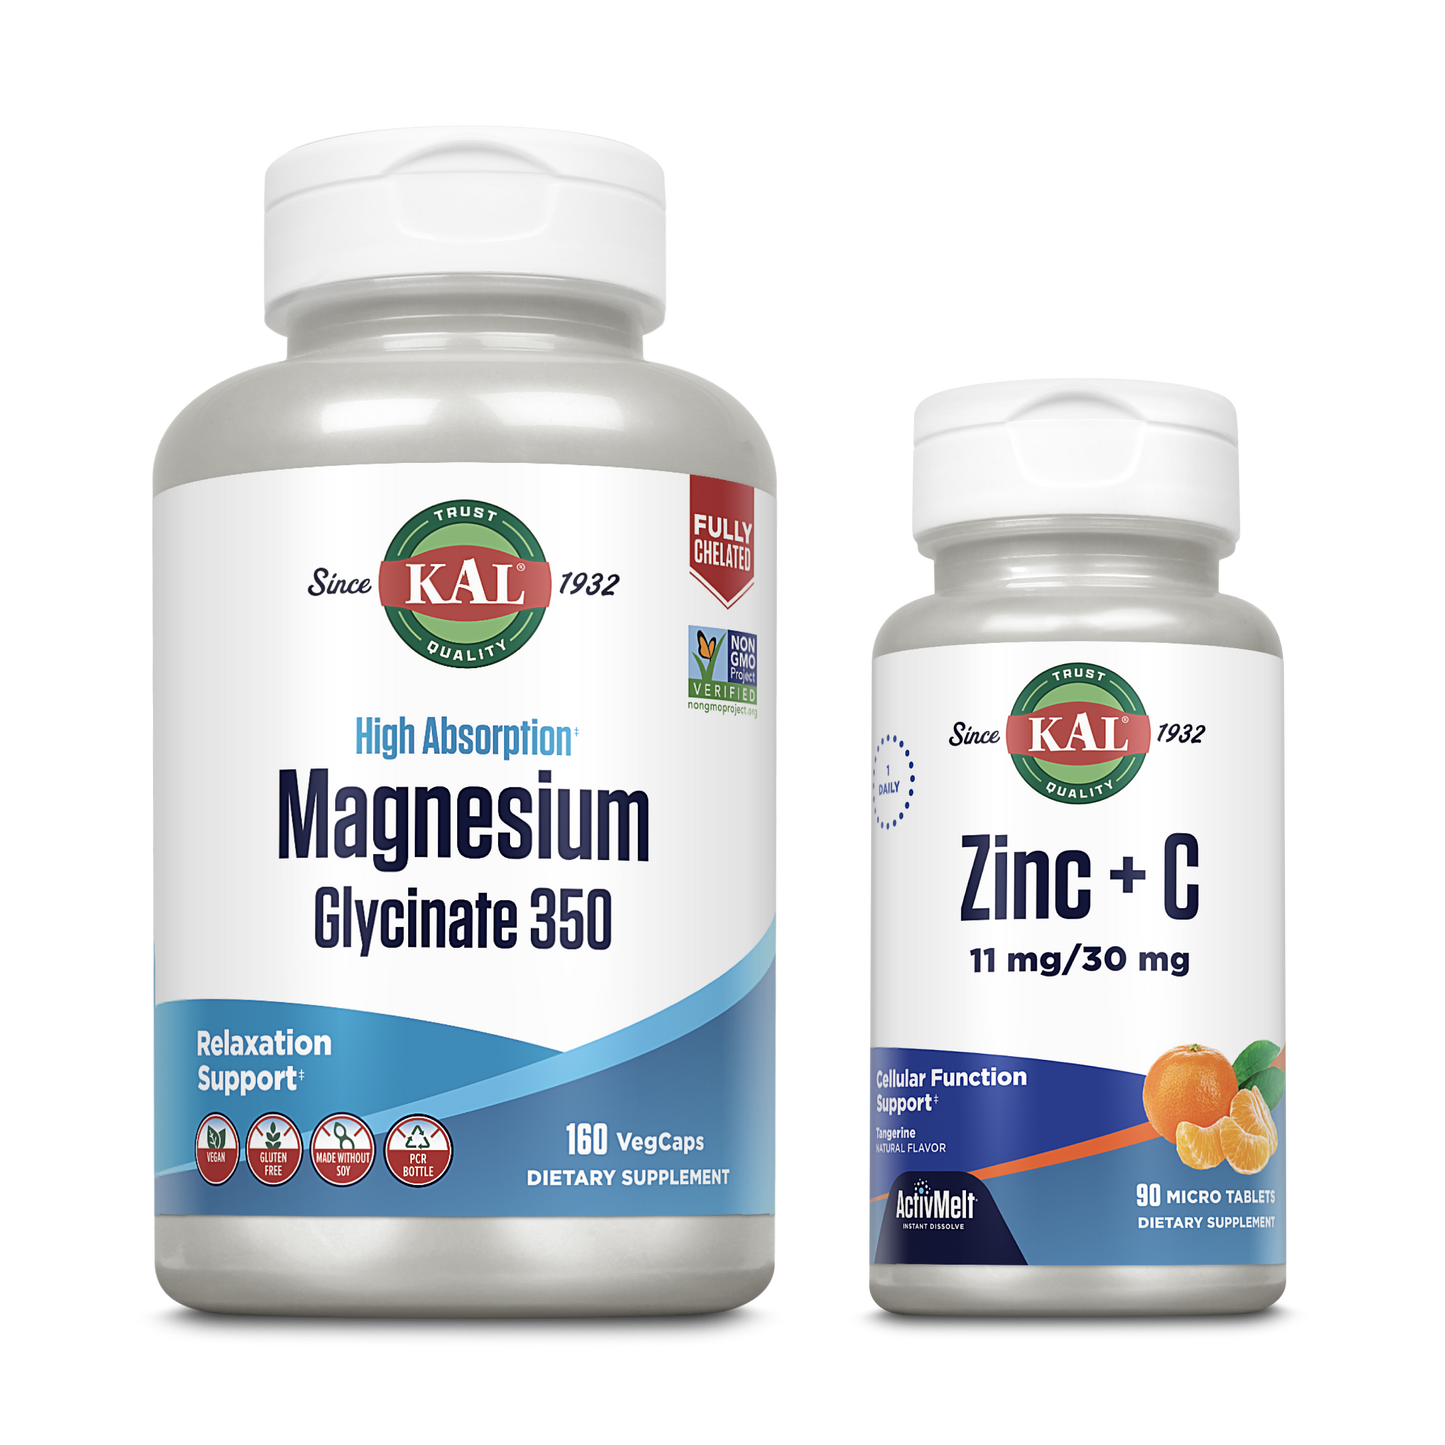 Magnesium & Zinc Bundle